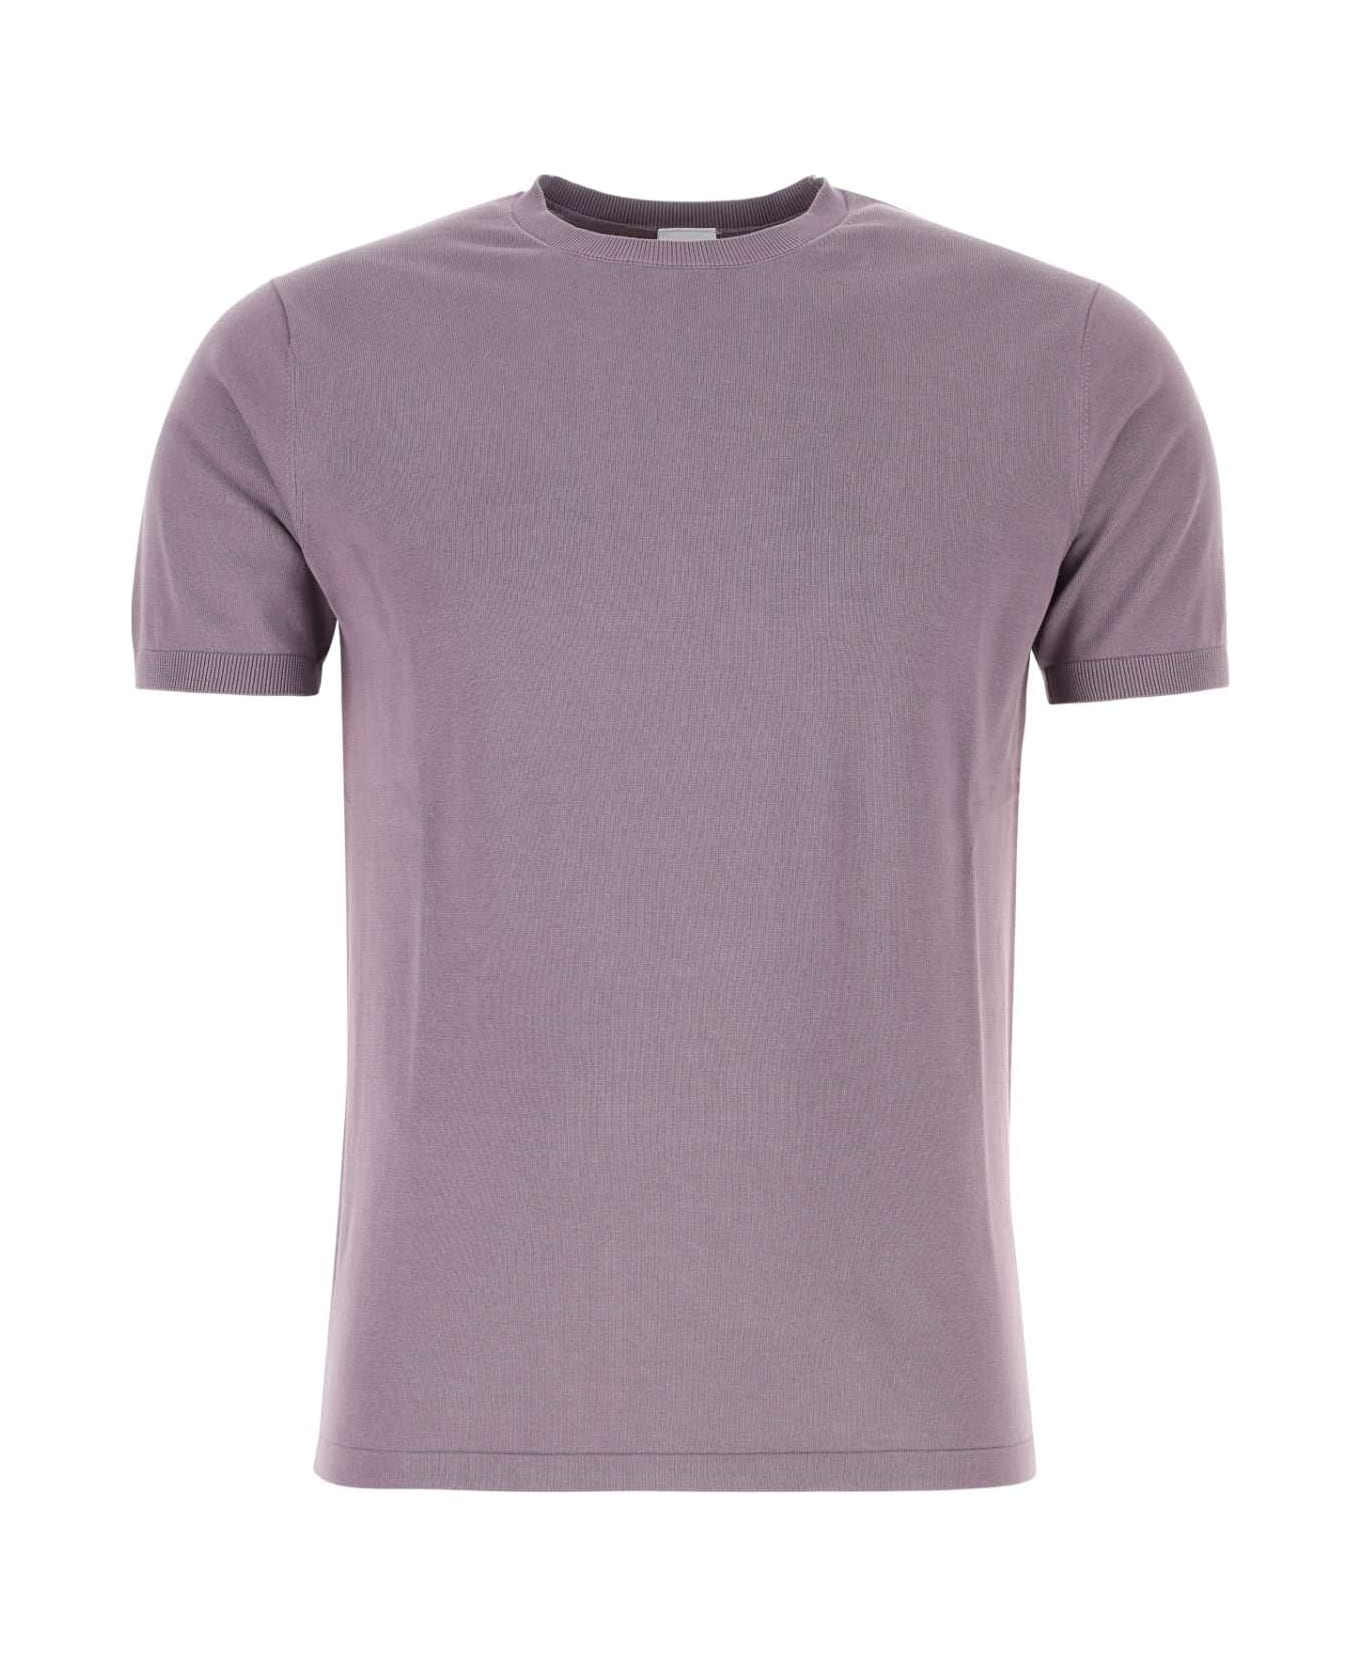 Aspesi Lilac Cotton T-shirt - 01148